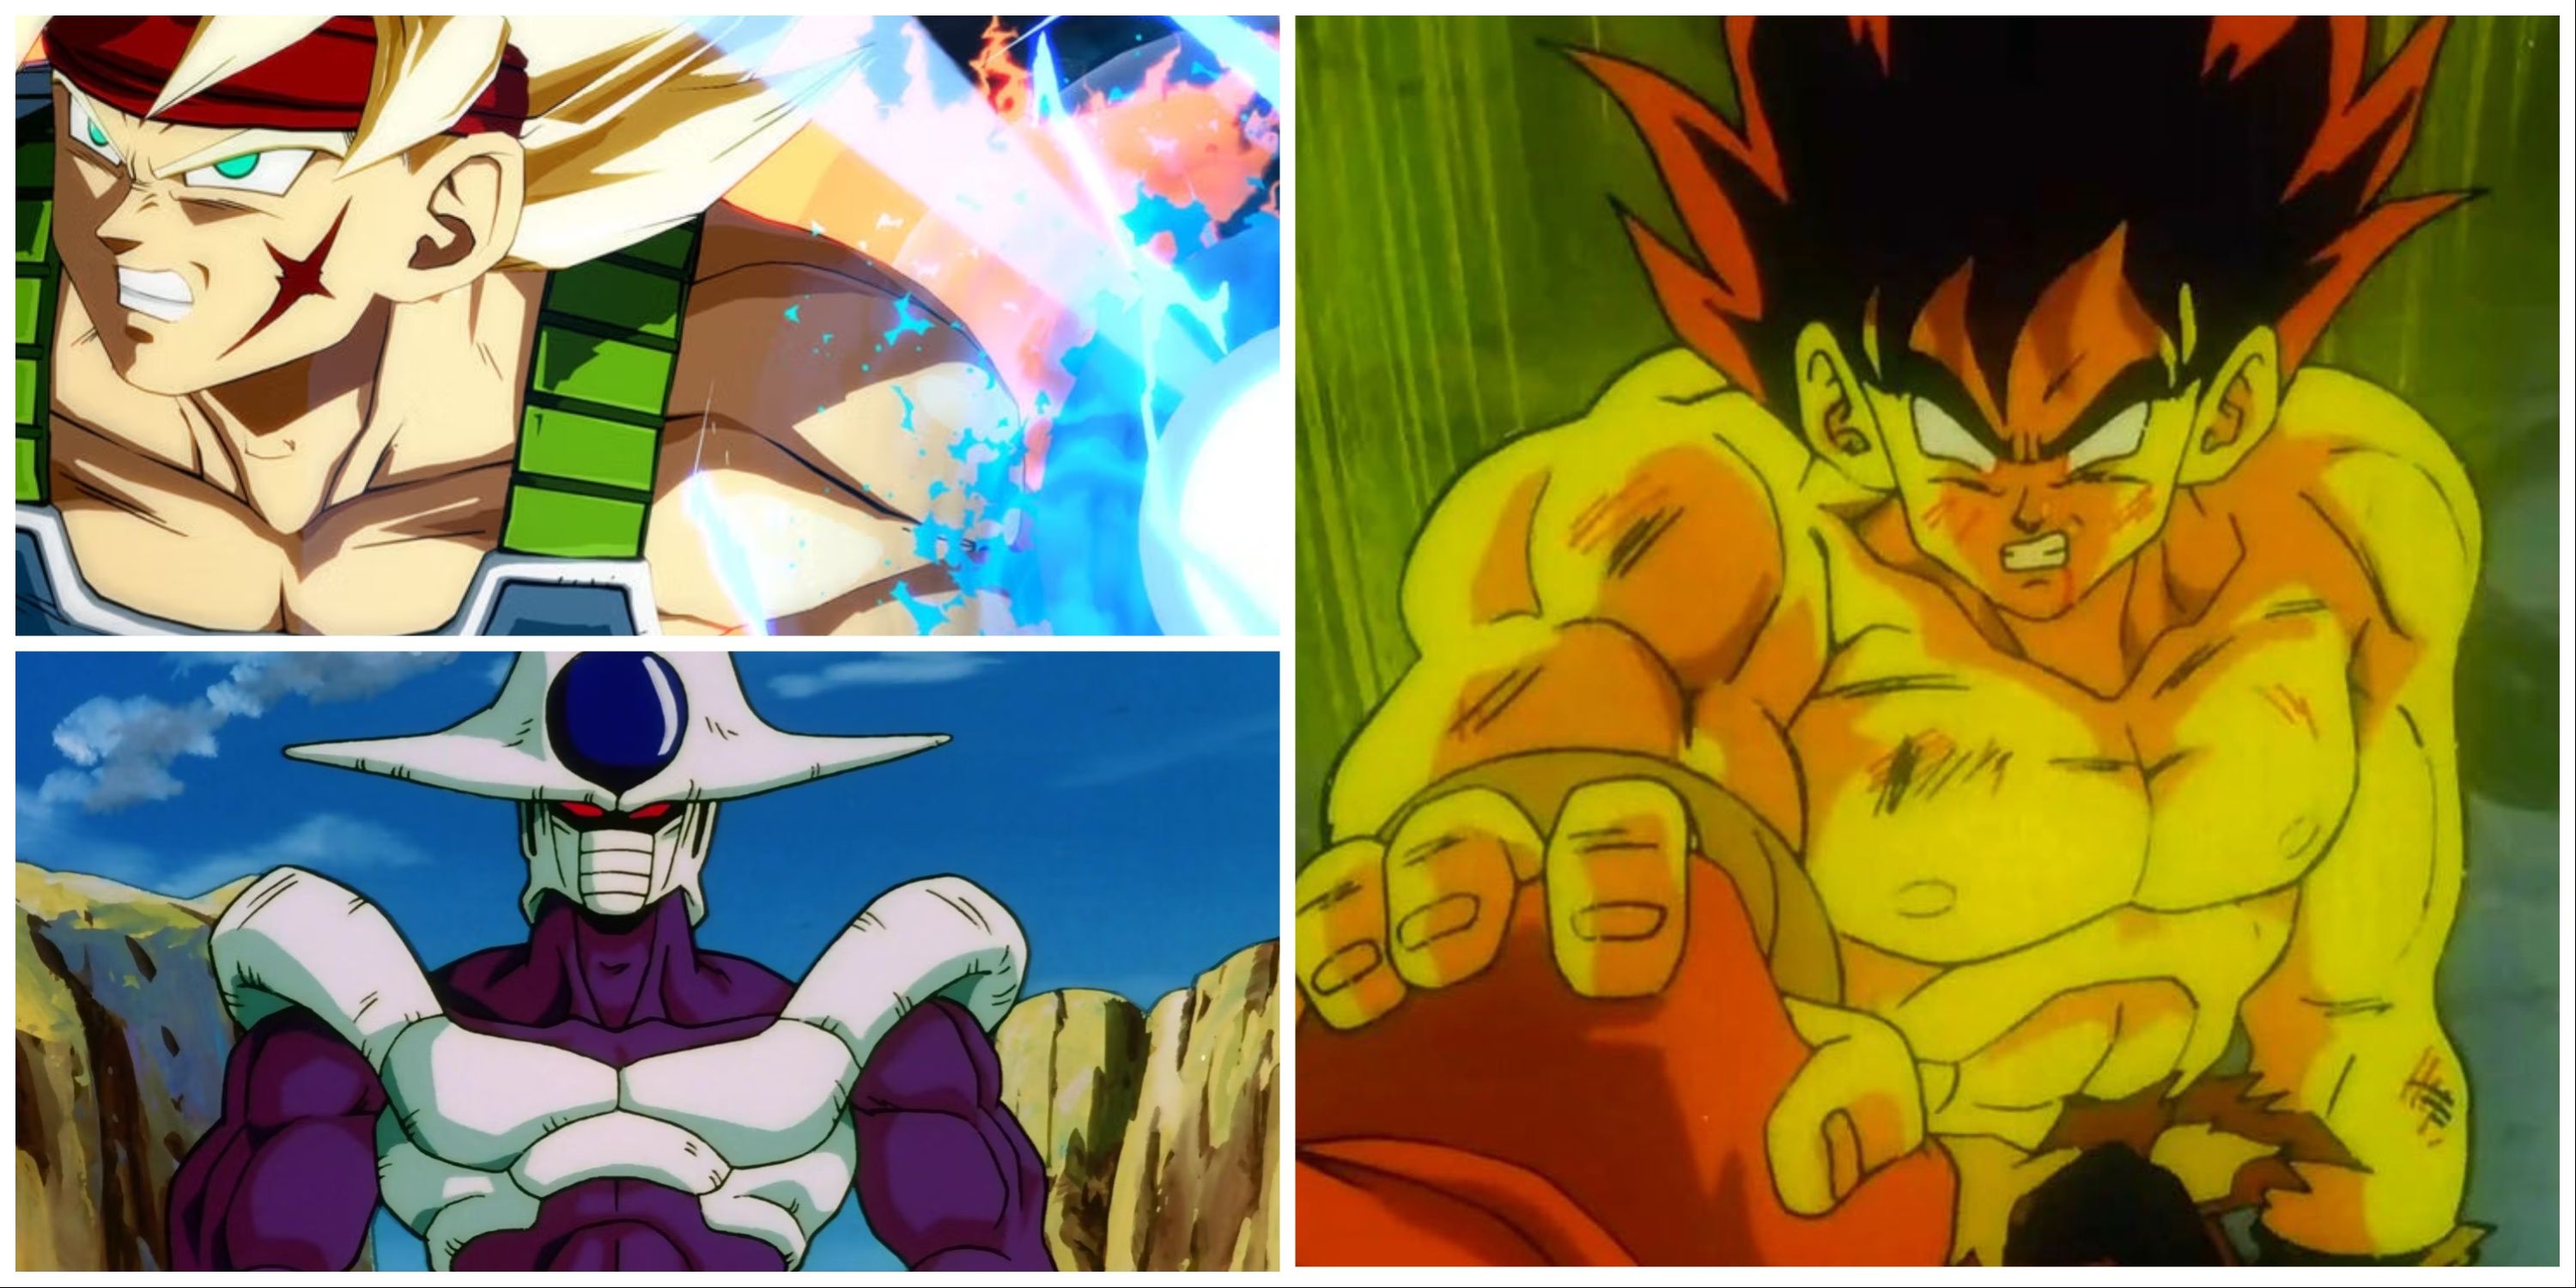 A collage of three images, including Super Saiyan Bardock, Cooler, and False Super Saiyan Goku